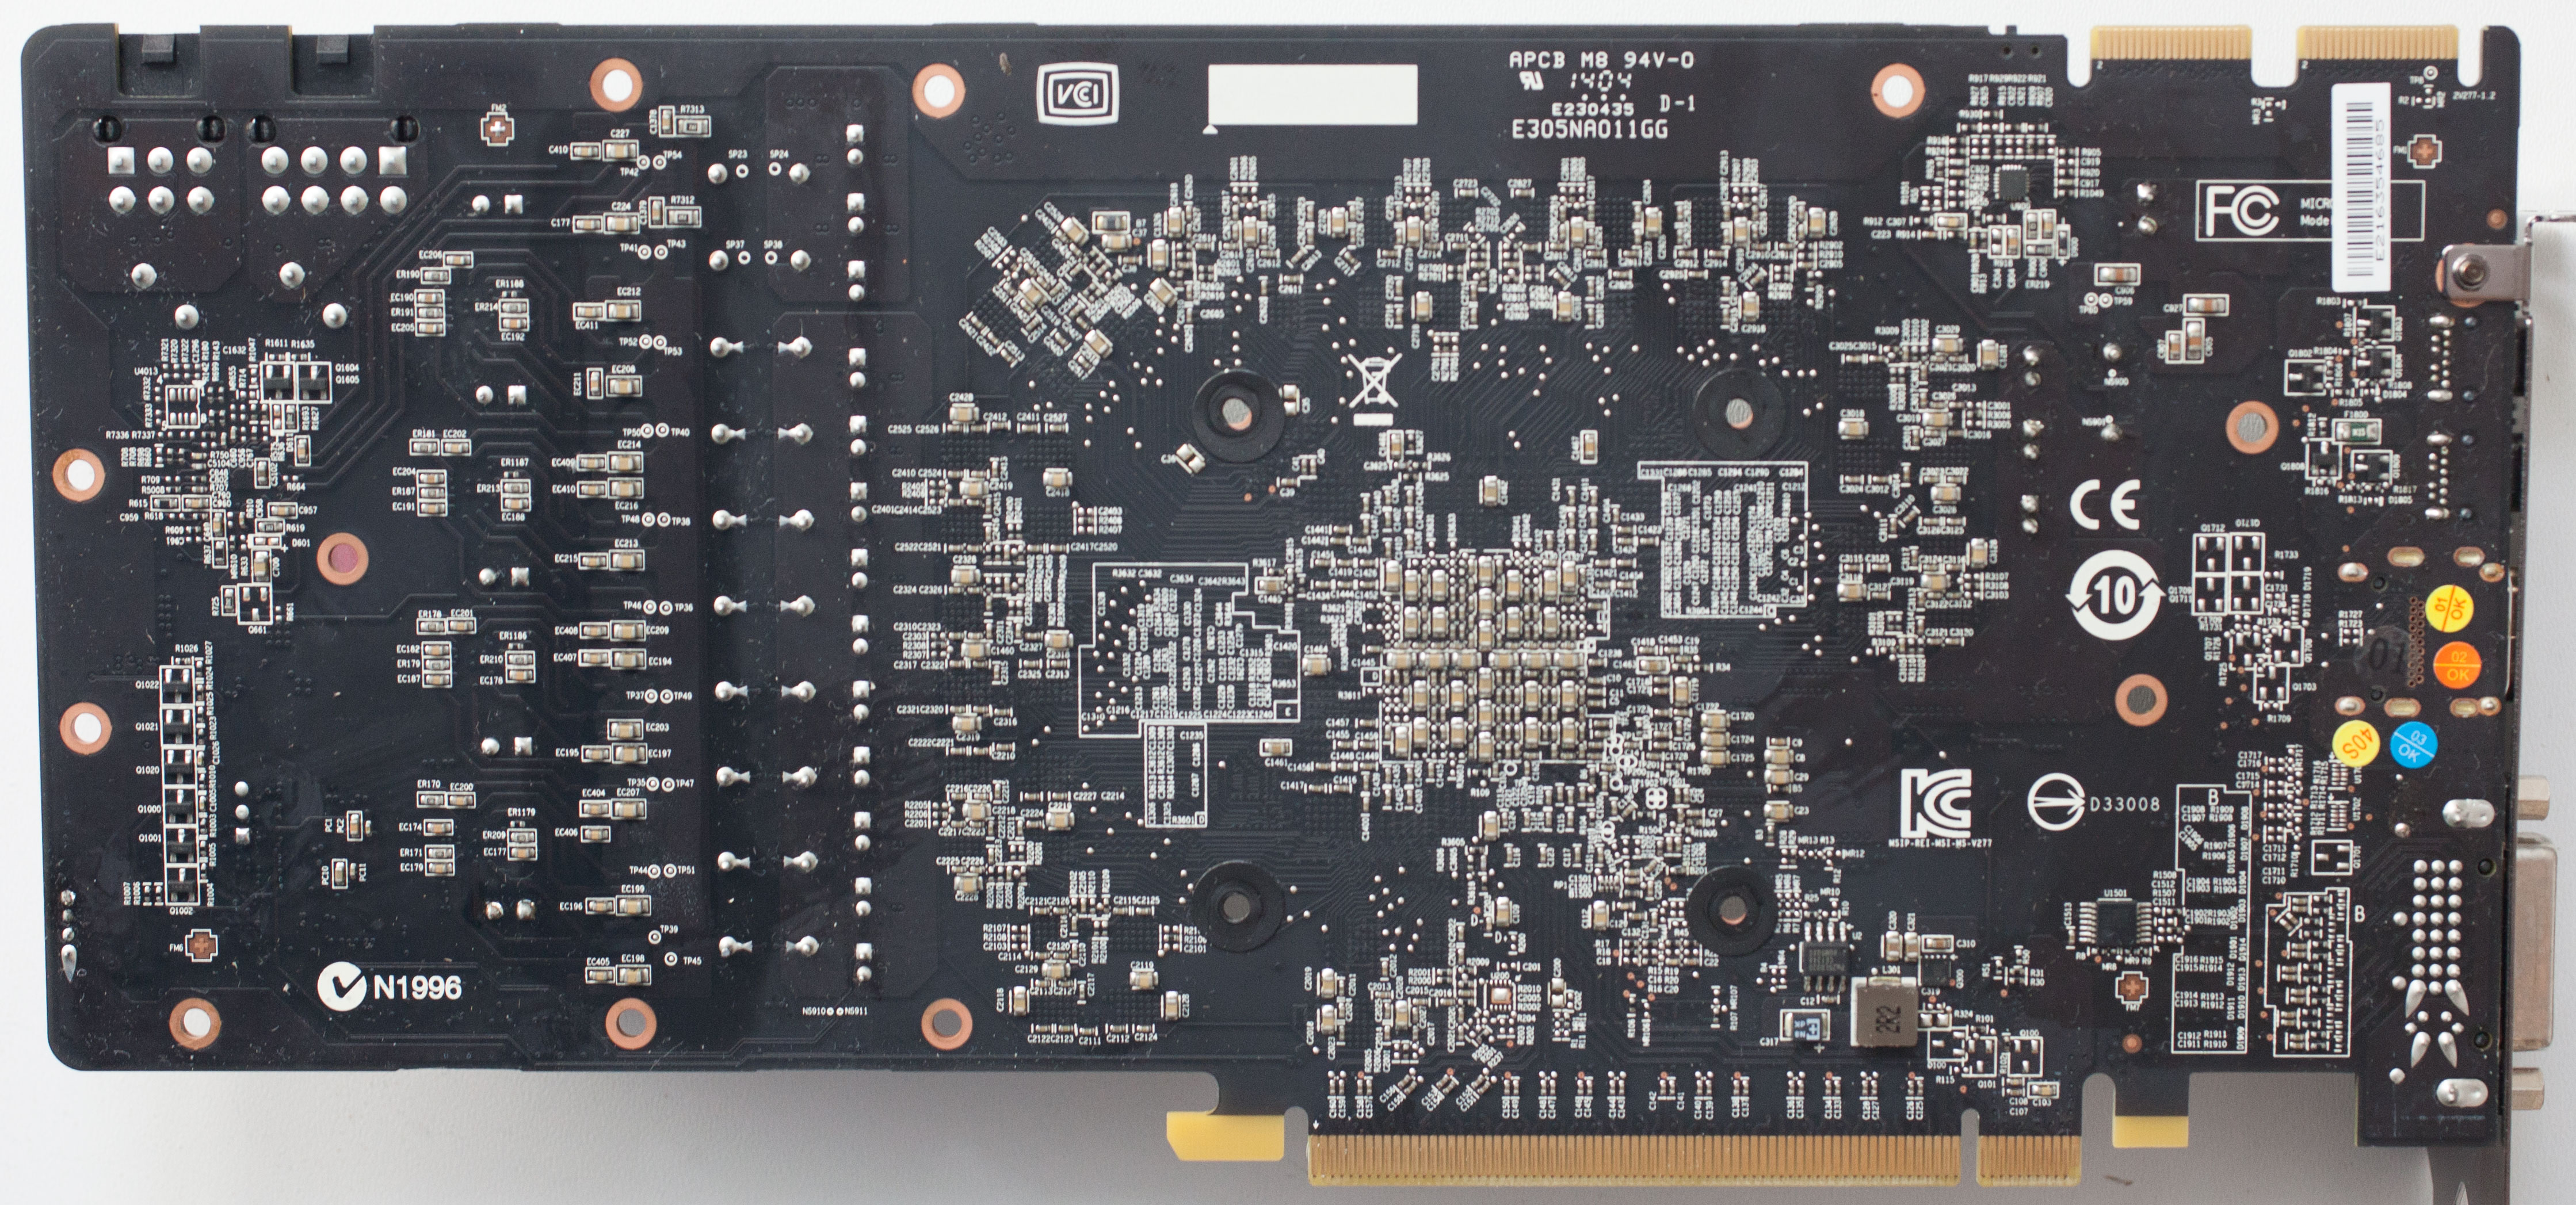 Precede ballet pin MSI Radeon R9 280X Gaming 6 GB Review - The Card | TechPowerUp